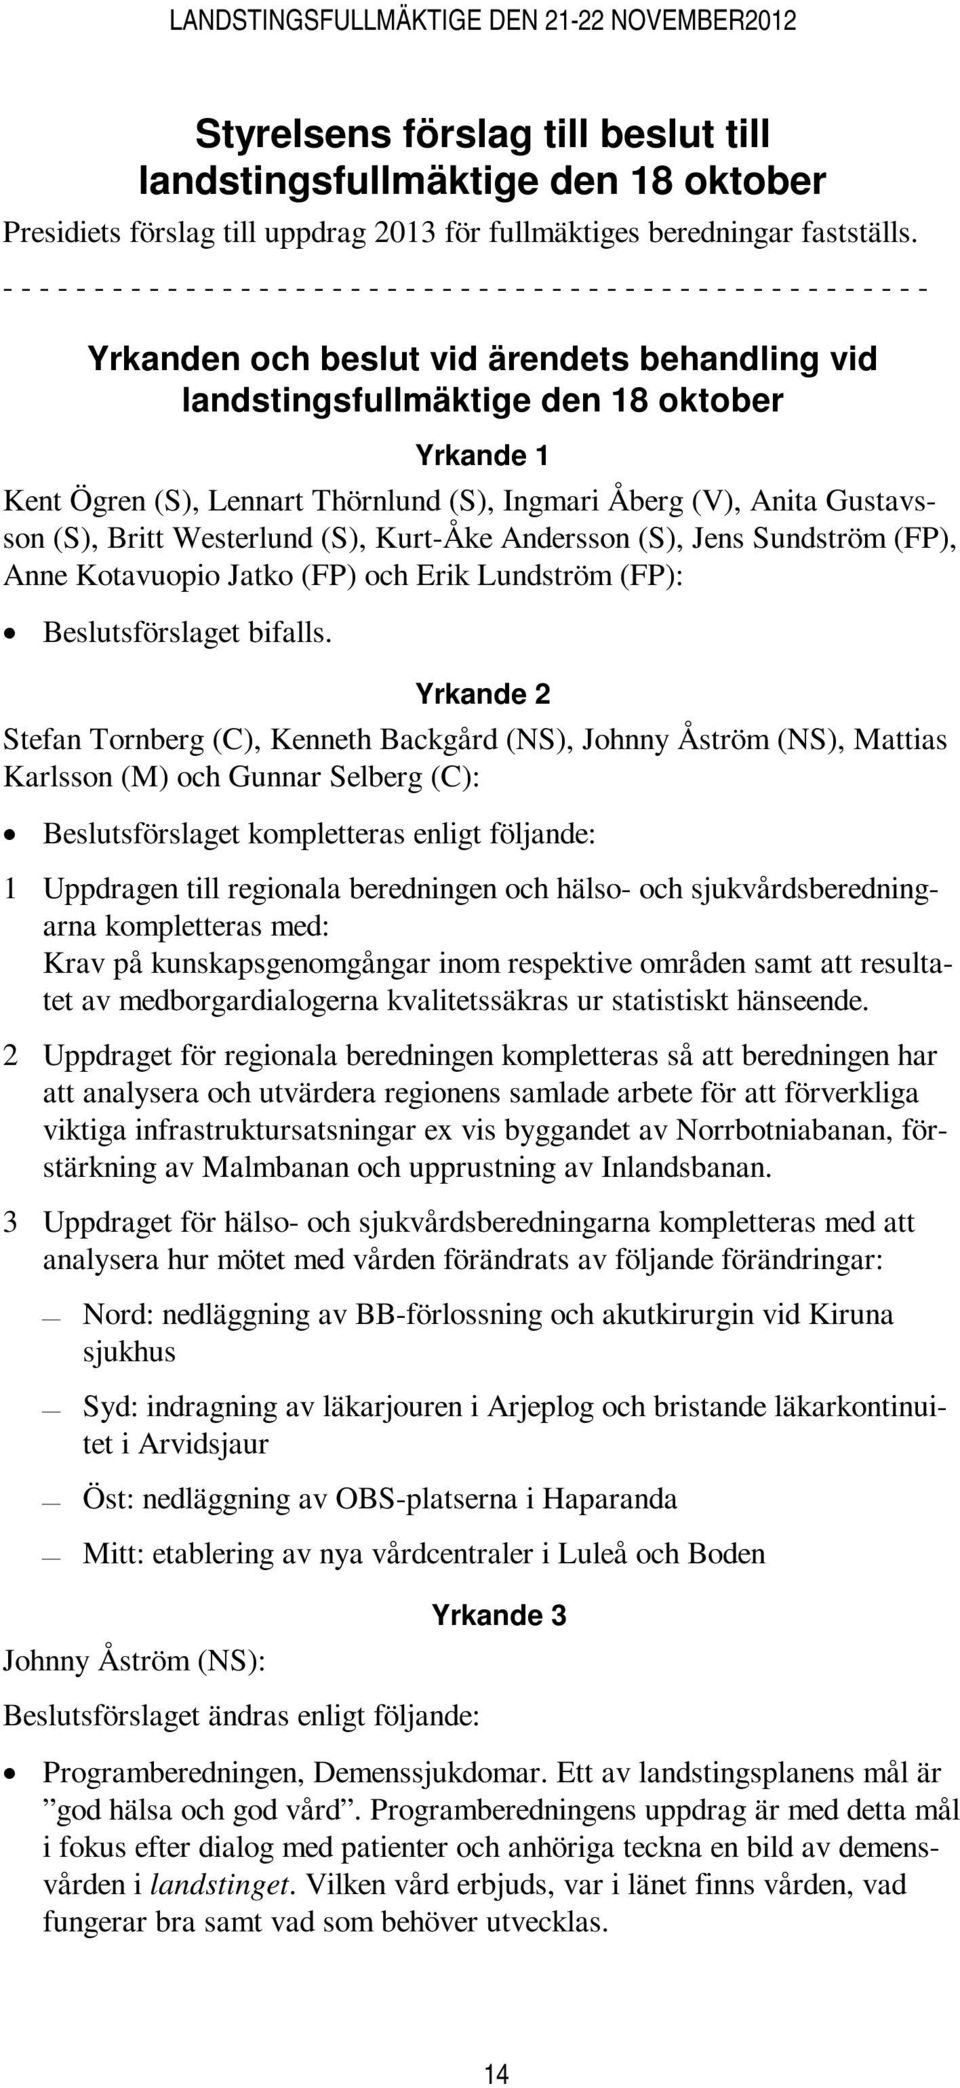 Kurt-Åke Andersson (S), Jens Sundström (FP), Anne Kotavuopio Jatko (FP) och Erik Lundström (FP): Beslutsförslaget bifalls.